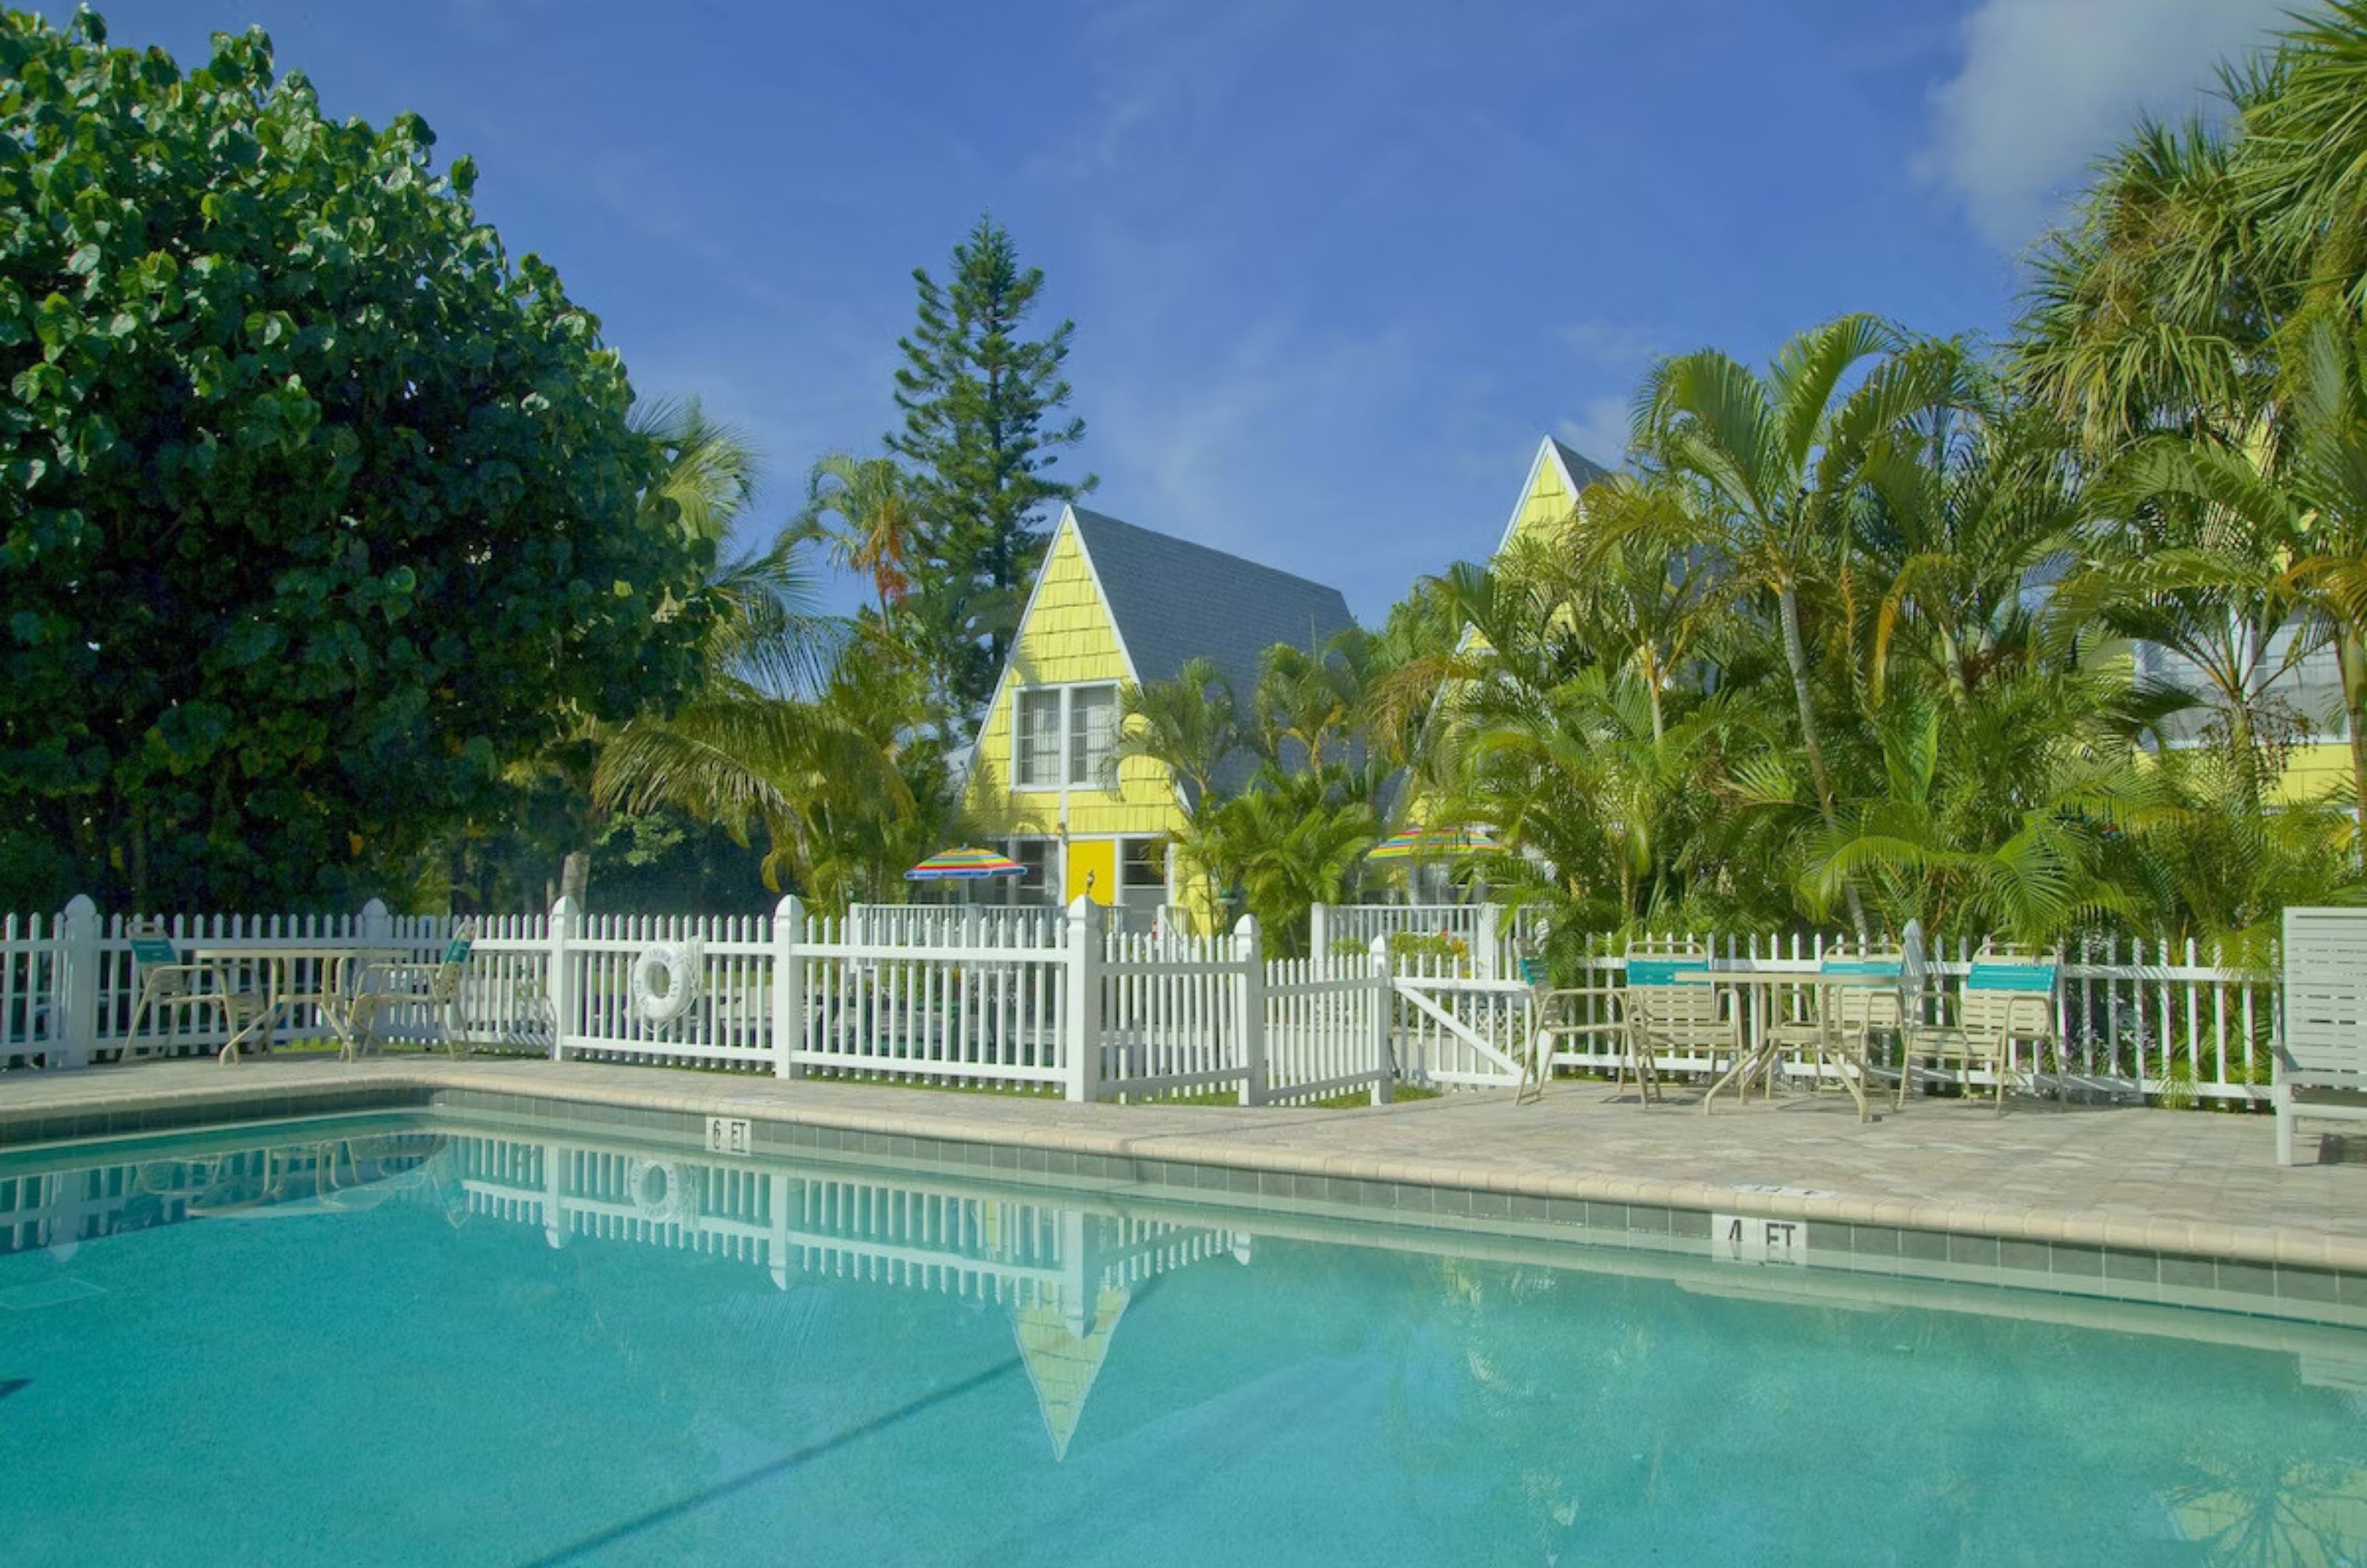 Anchor Inn & Cottages - https://www.beachguide.com/sanibel-captiva-vacation-rentals-anchor-inn--cottages--789-0-20241-3581.jpg?width=185&height=185